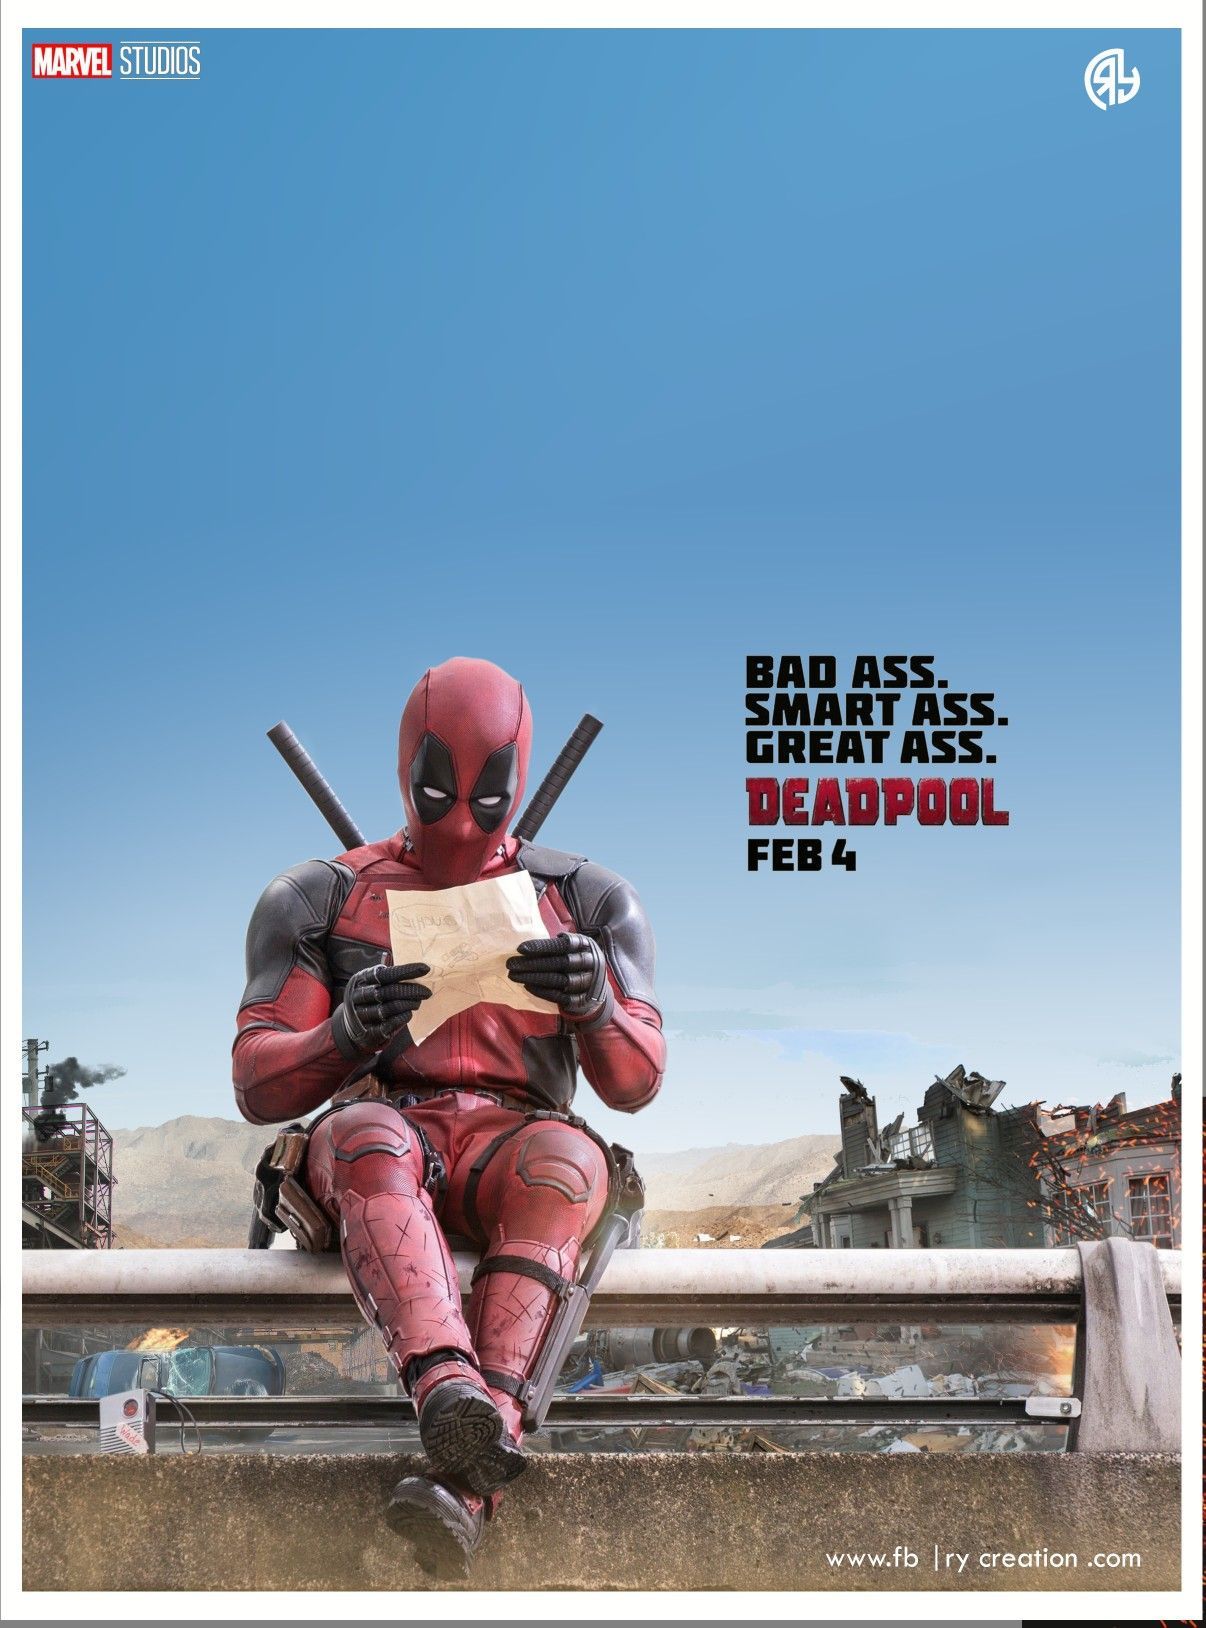  Deadpool & Wolverine Hintergrundbild 1206x1628. ΗΔΕΝ on Deadpool. Deadpool poster, Wolverine poster, Reds poster